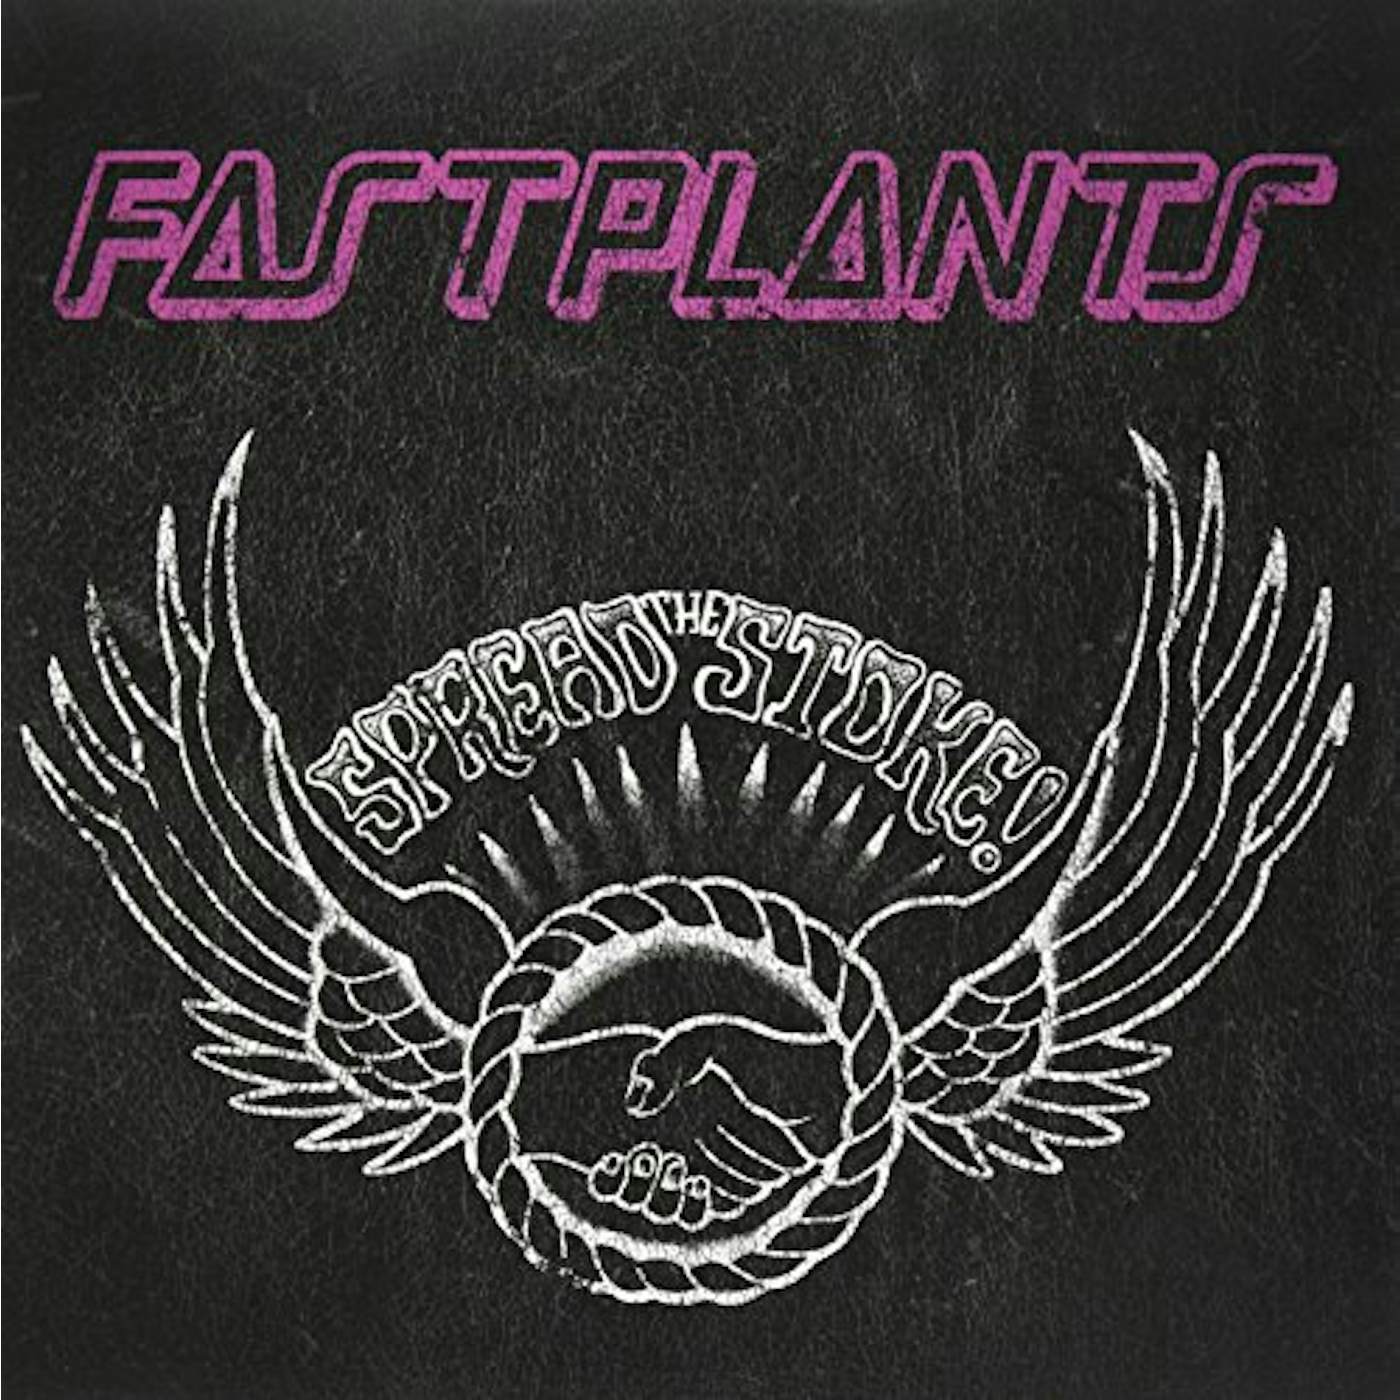 Fastplants Spread the Stoke Vinyl Record